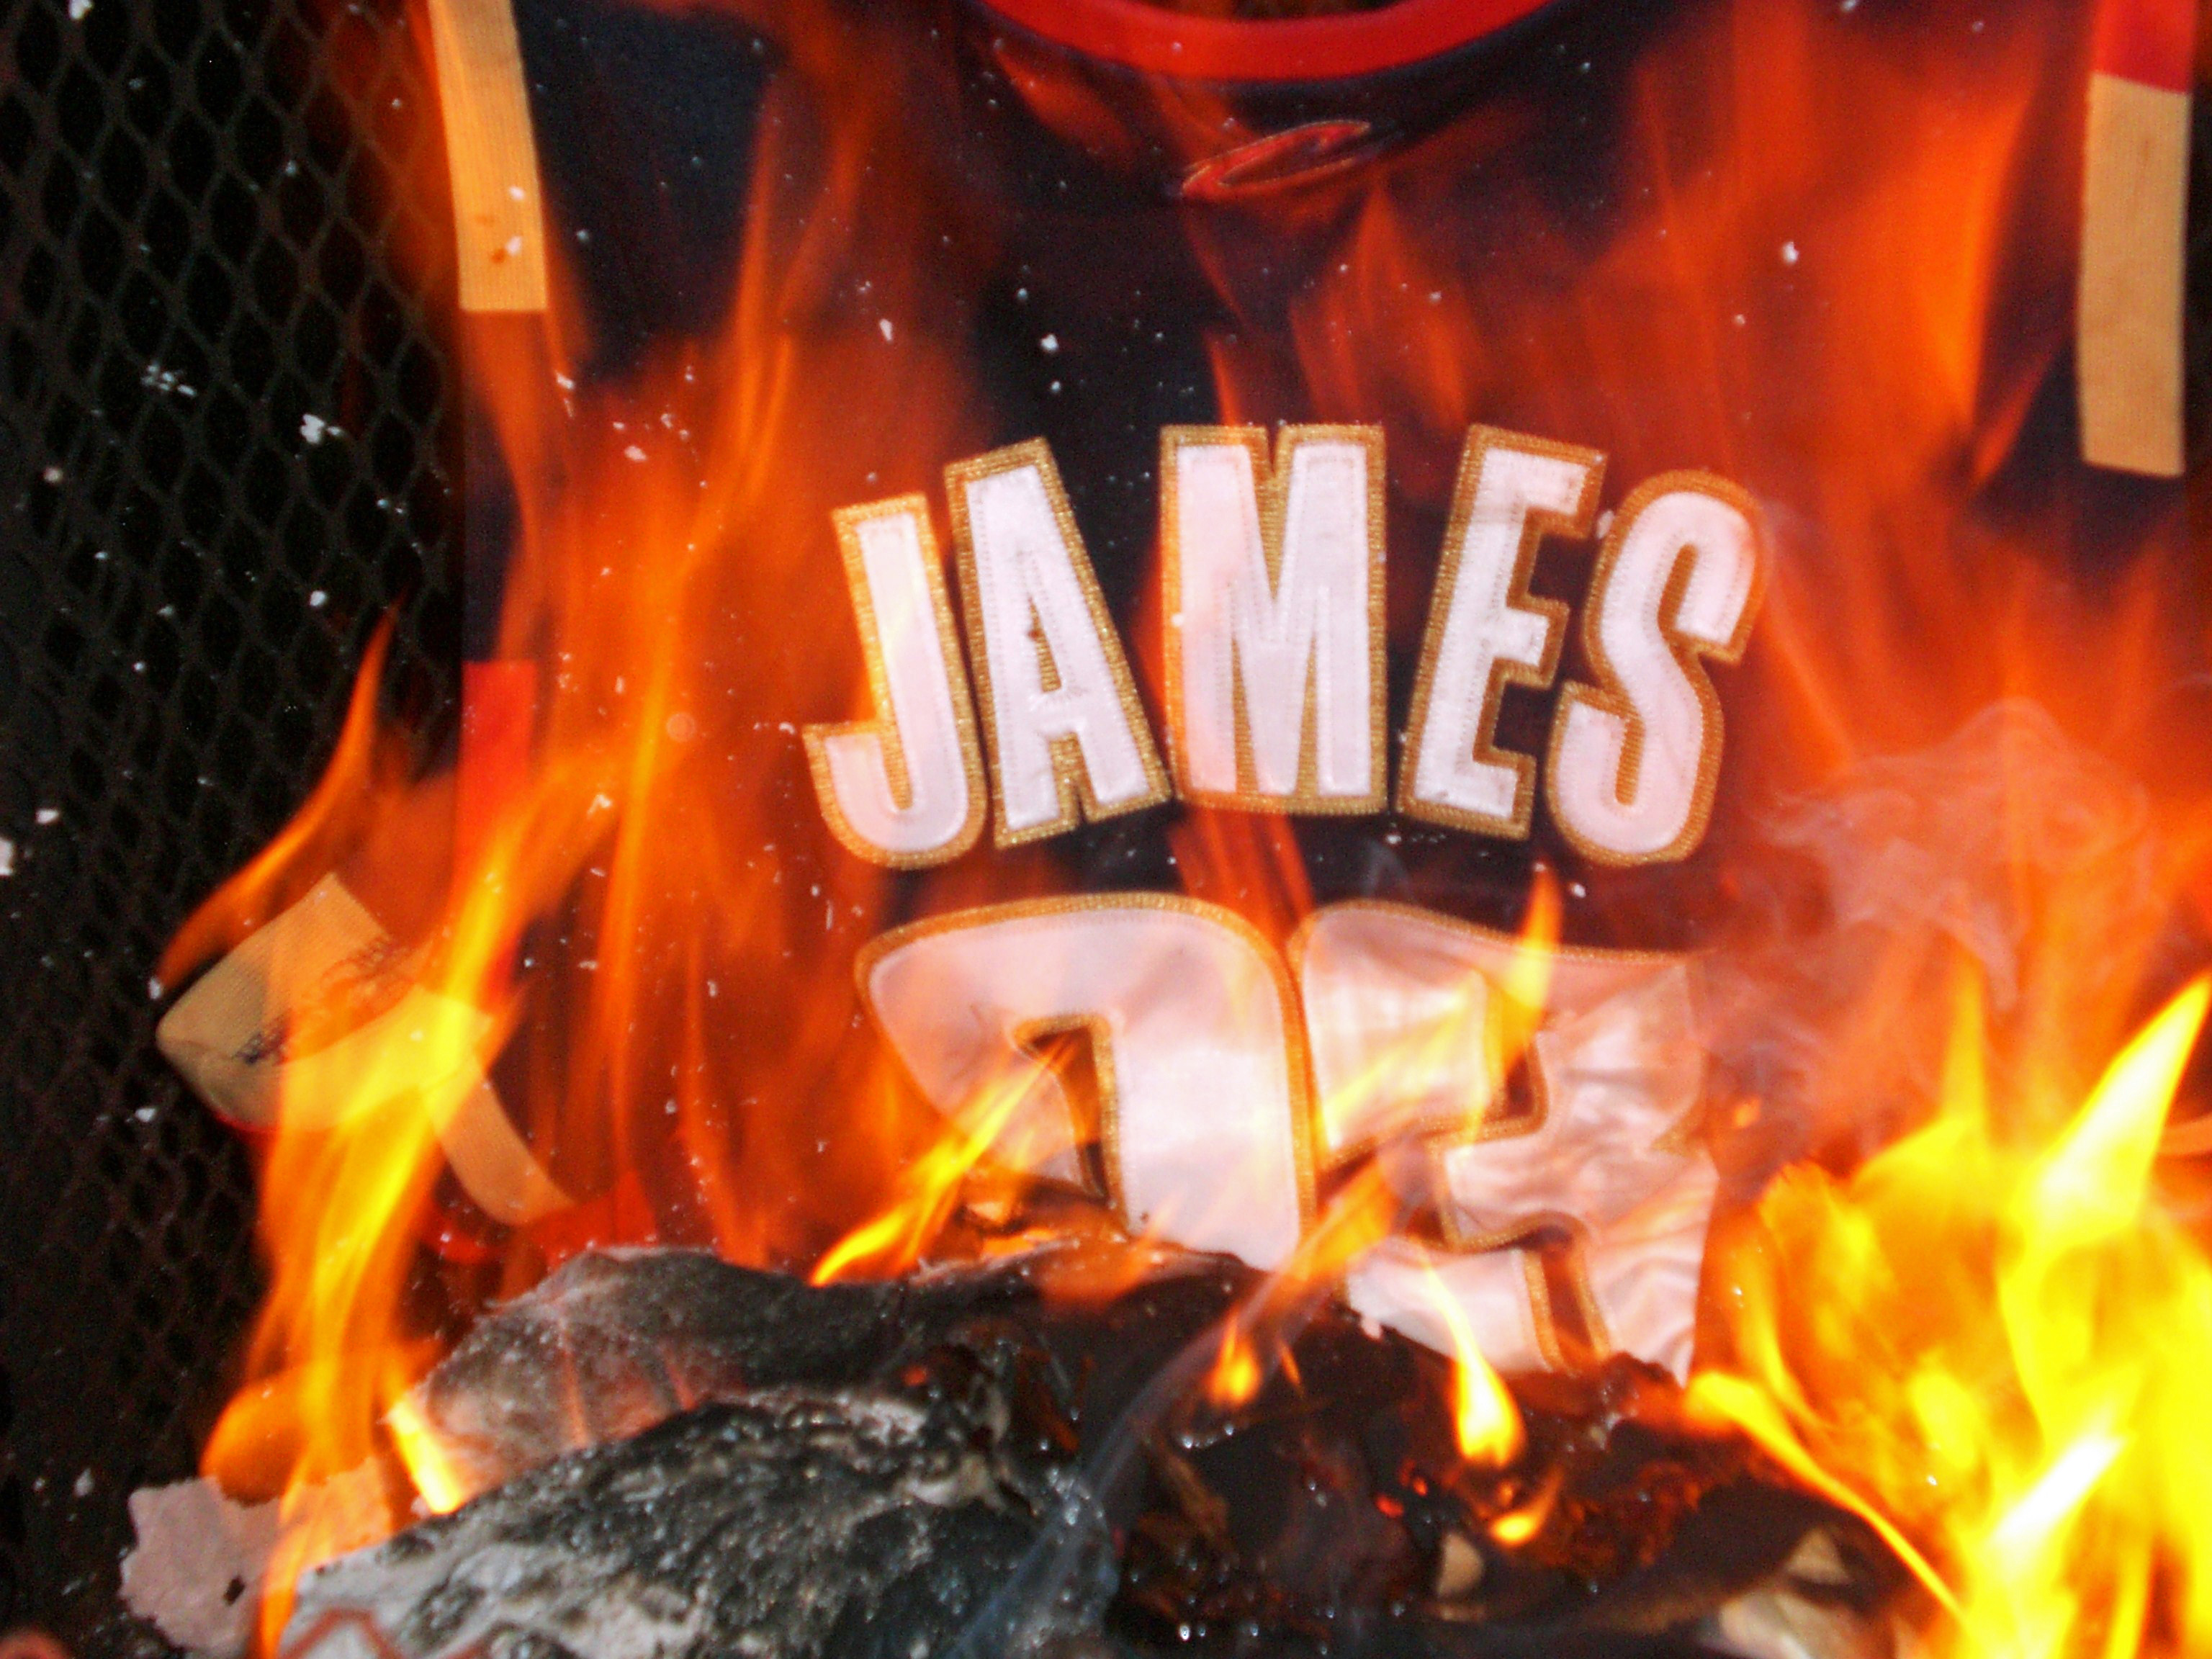 lebron james jersey burning